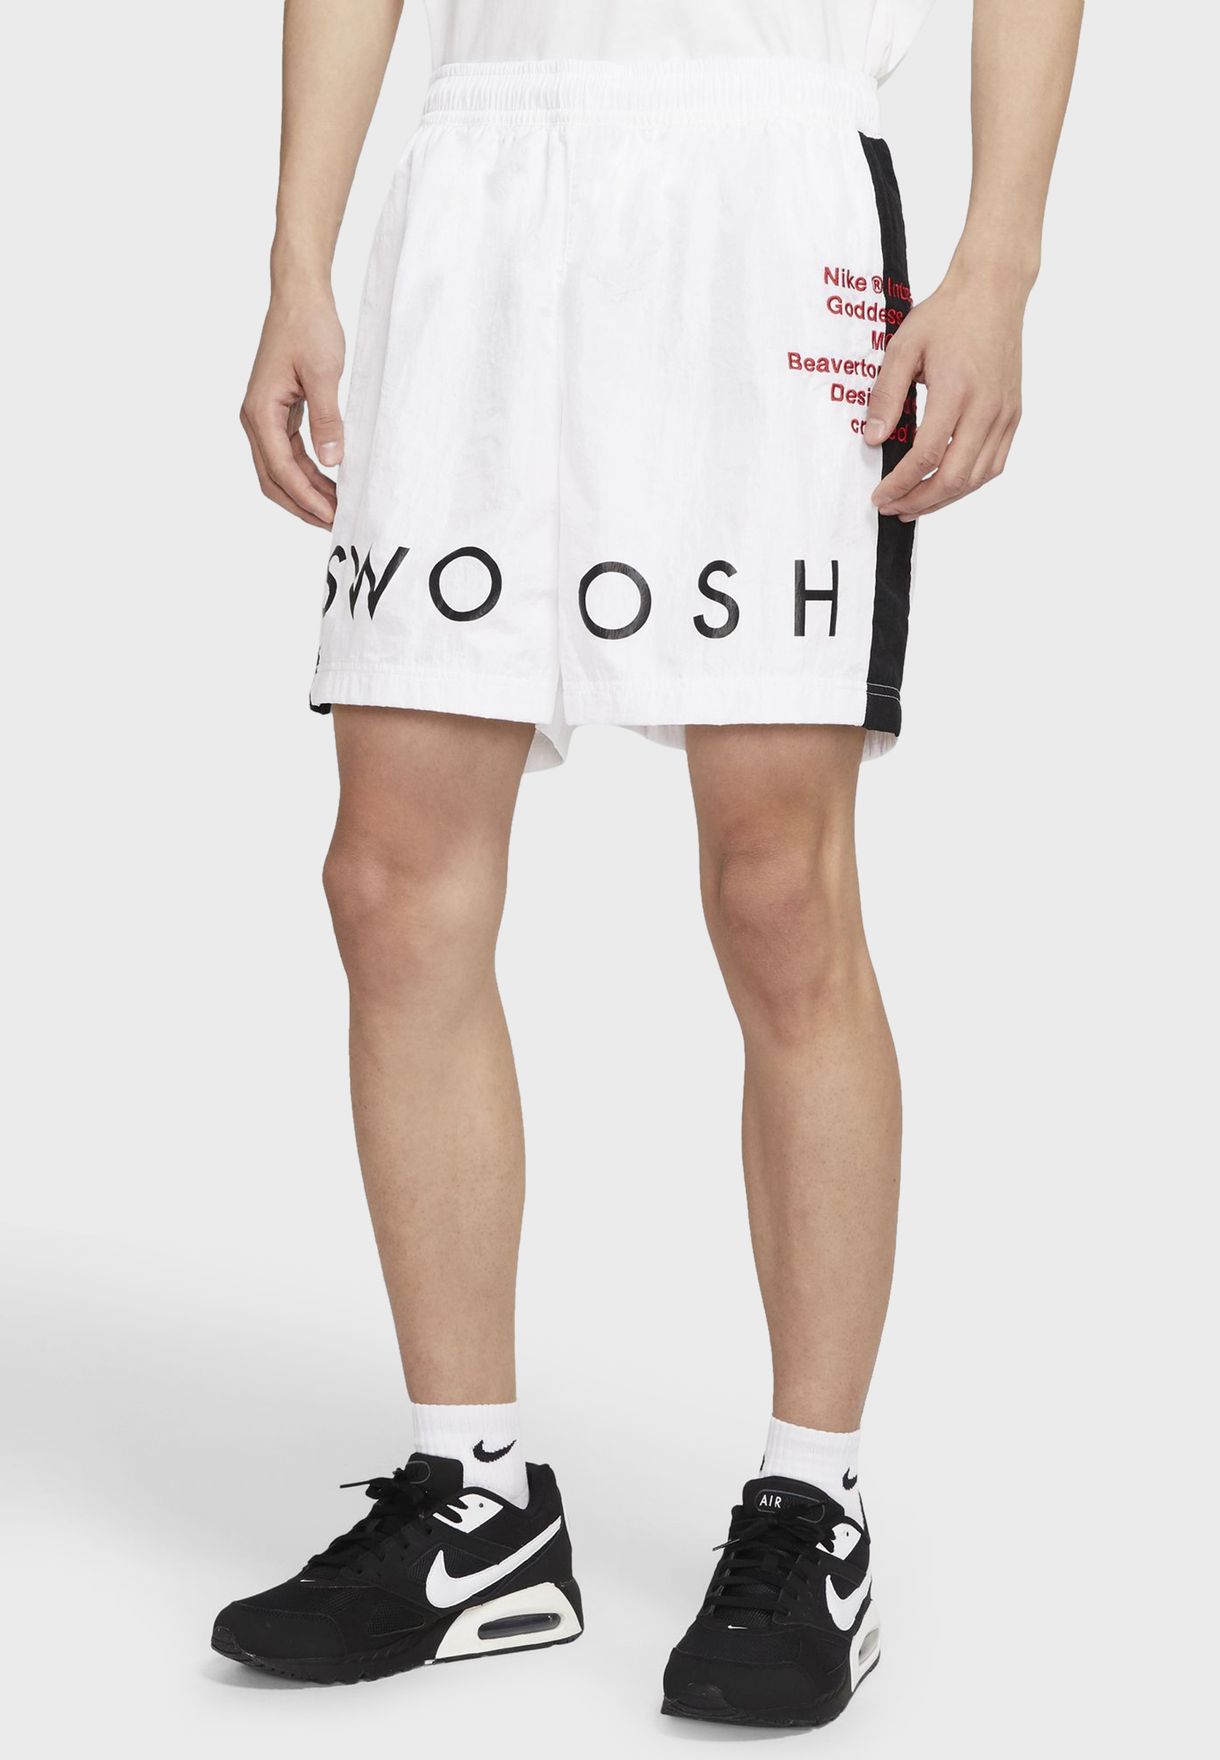 swoosh woven shorts